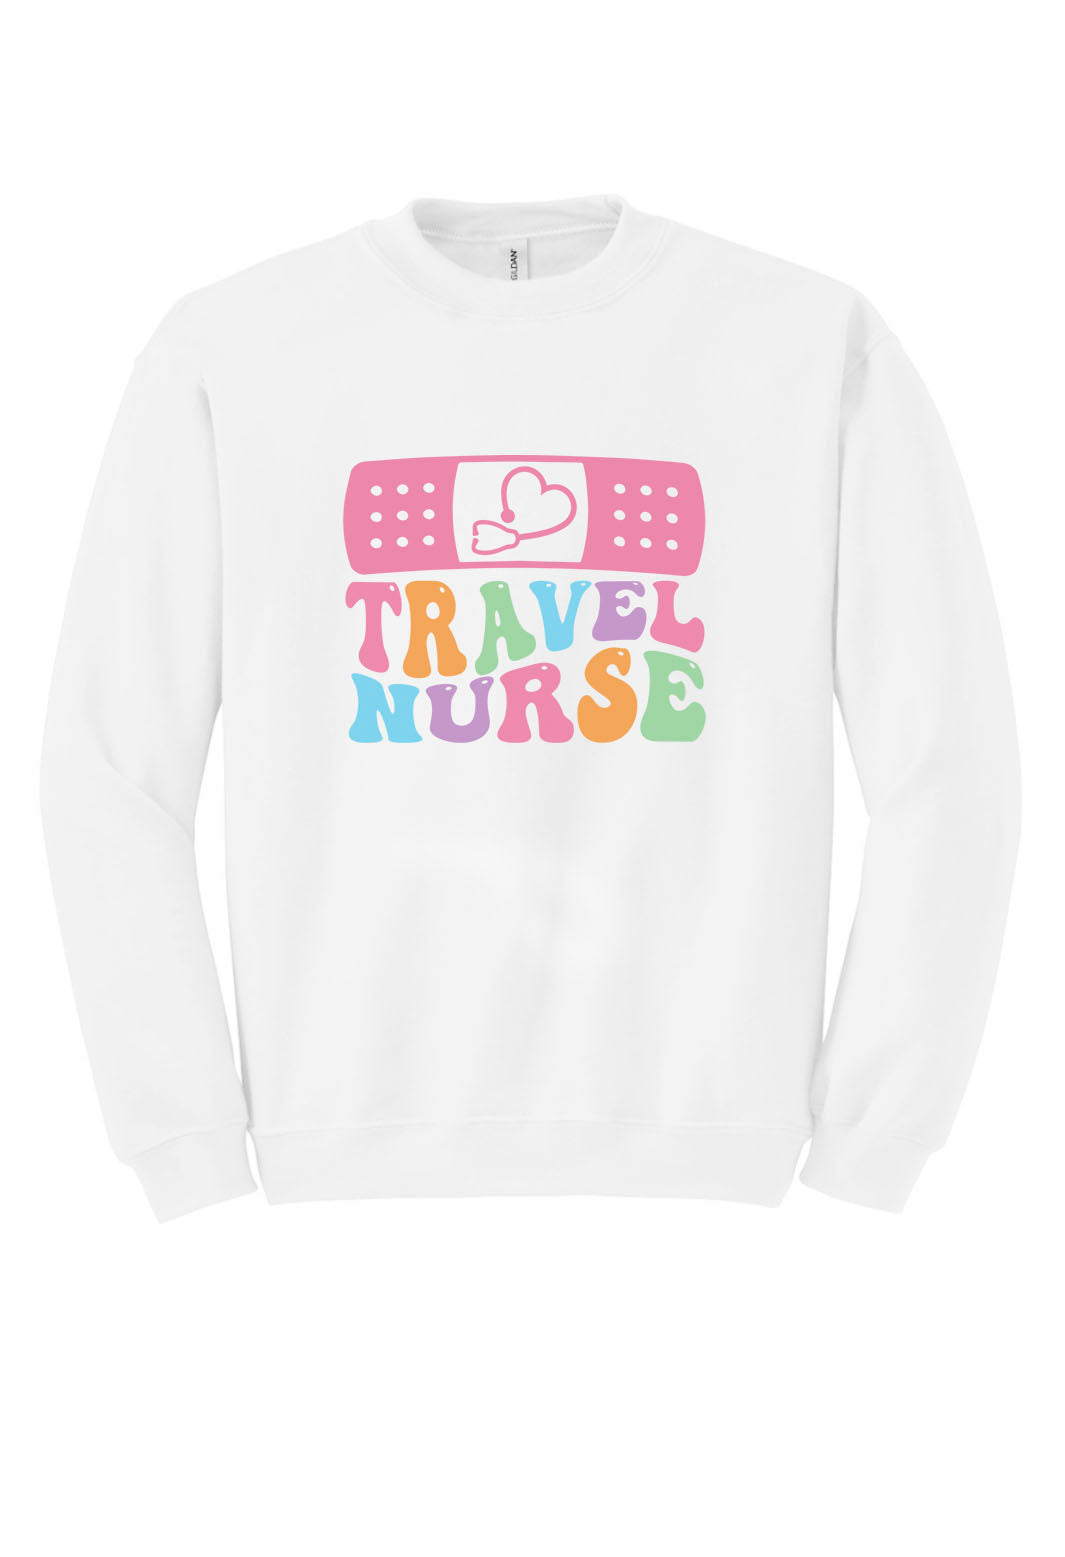 Travel RN Unisex Shirt or Crew